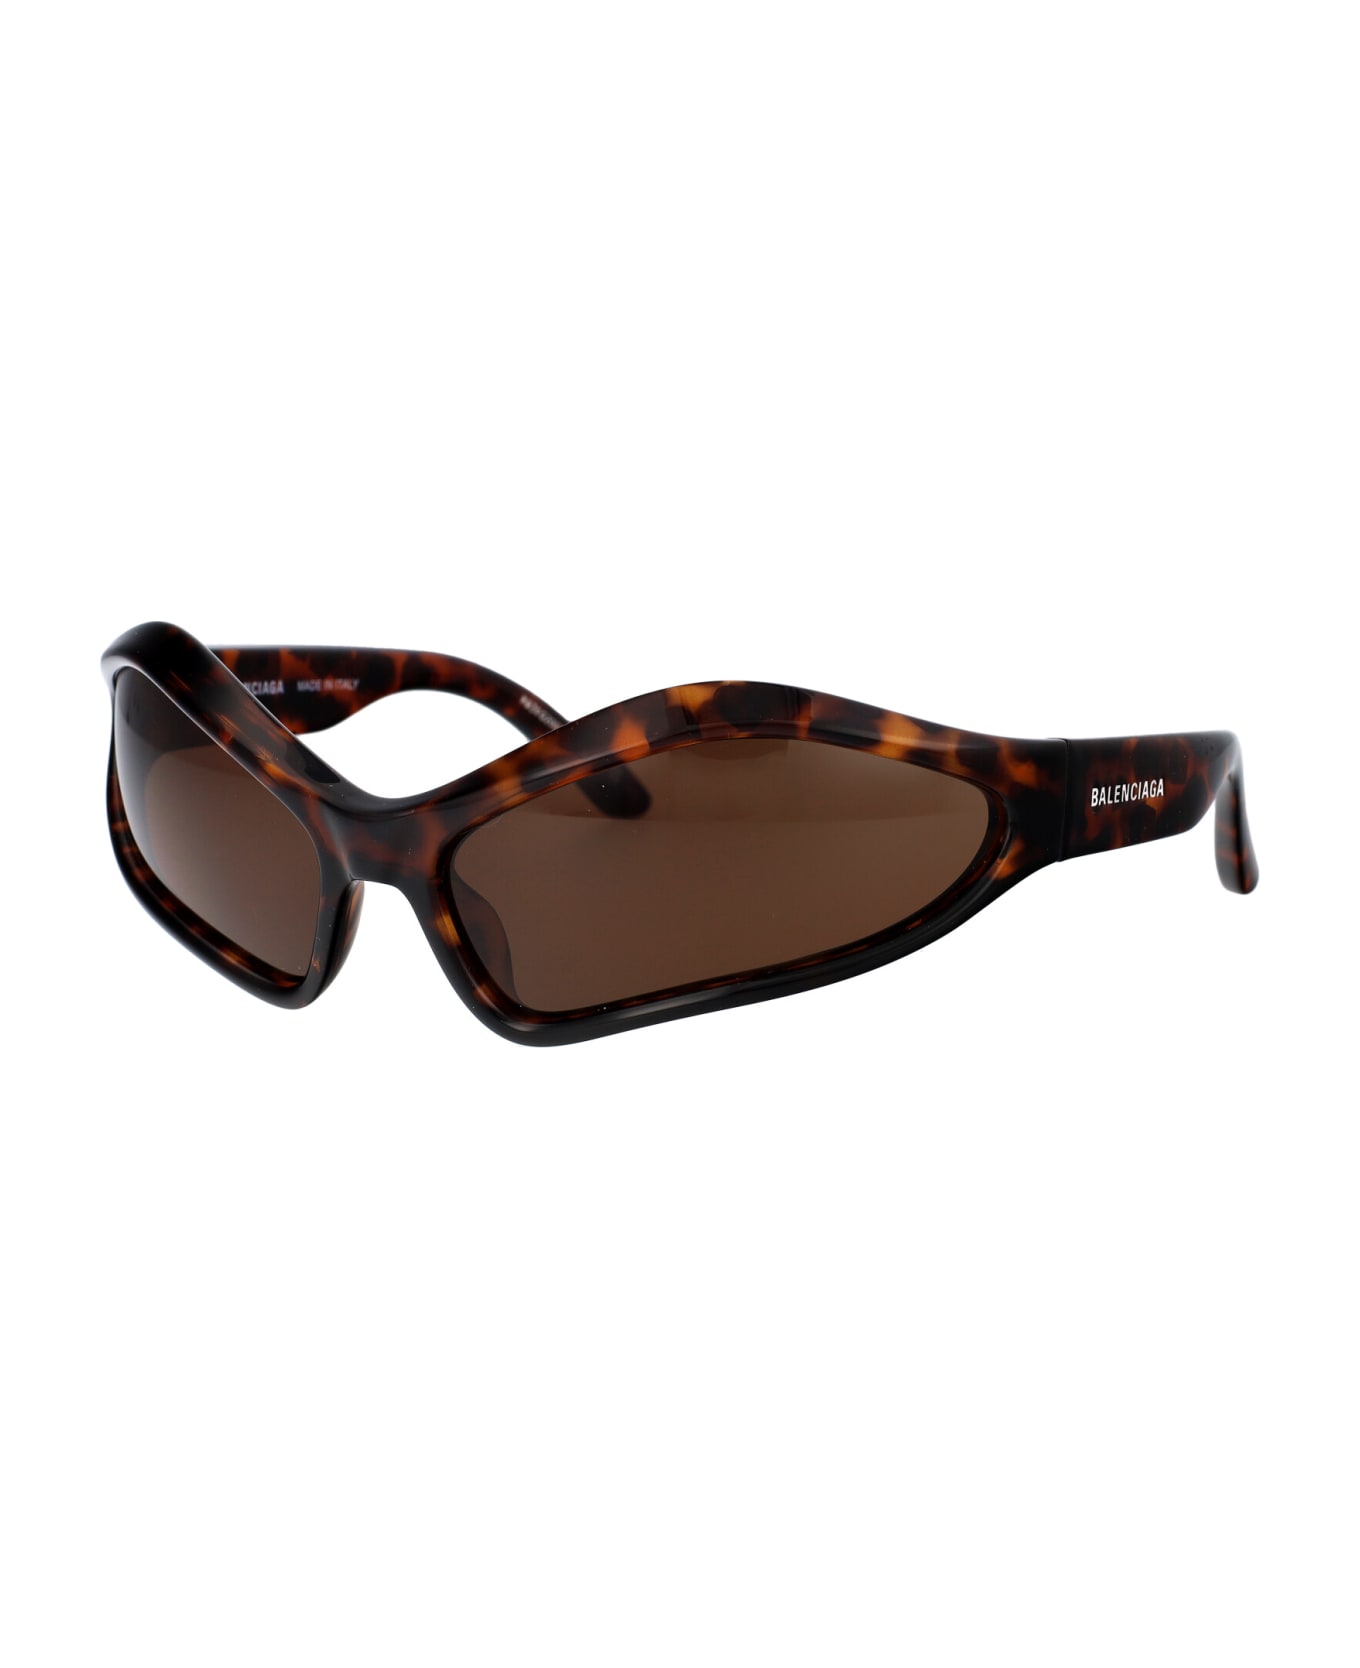 Balenciaga Eyewear Bb0314s Fennec-linea Extreme Sunglasses - 002 HAVANA HAVANA BROWN